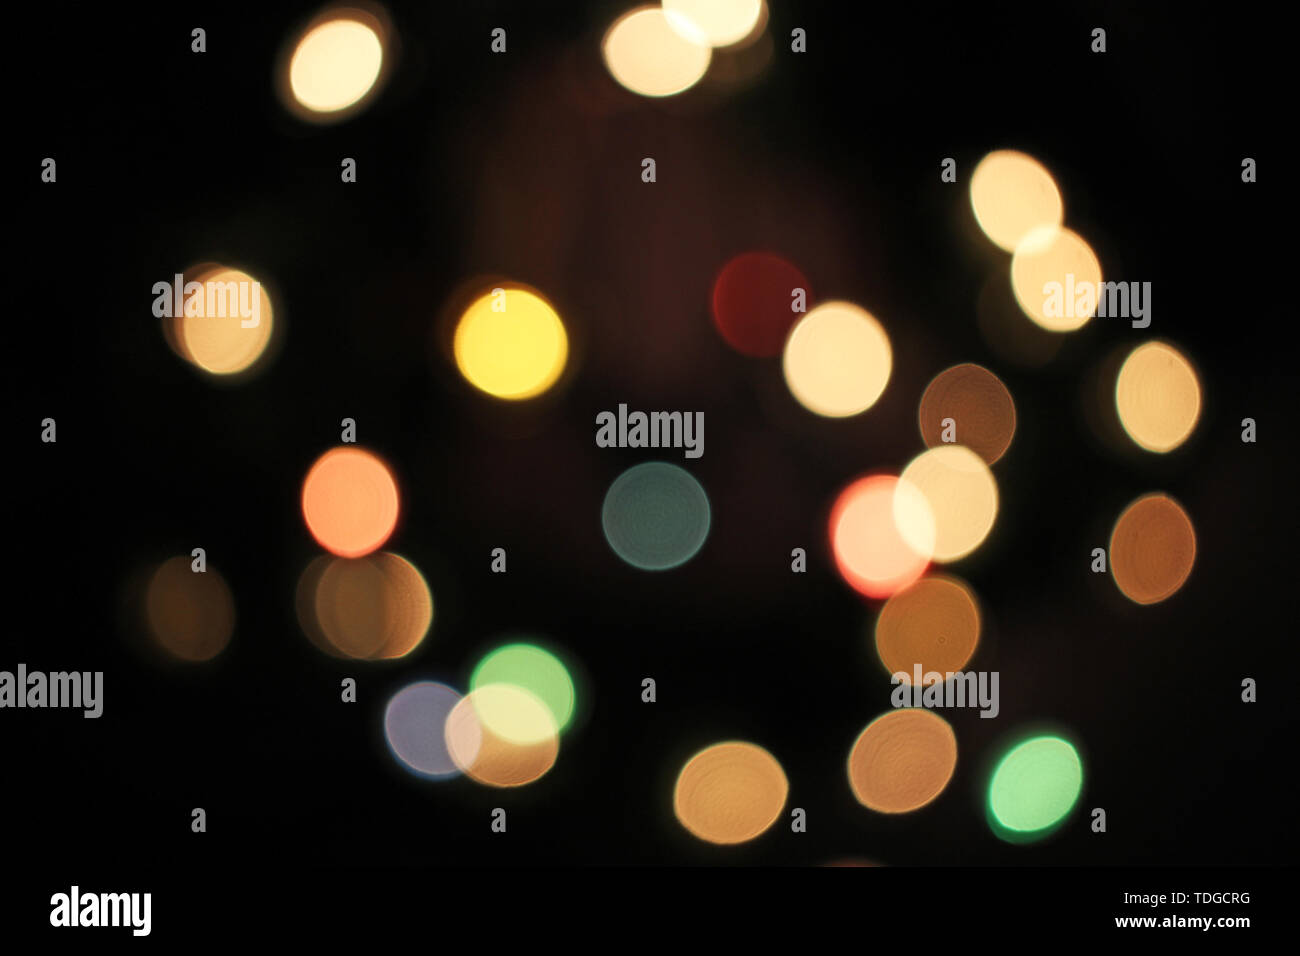 Blur blurred defocused christmas lights bokeh light dots background Stock Photo